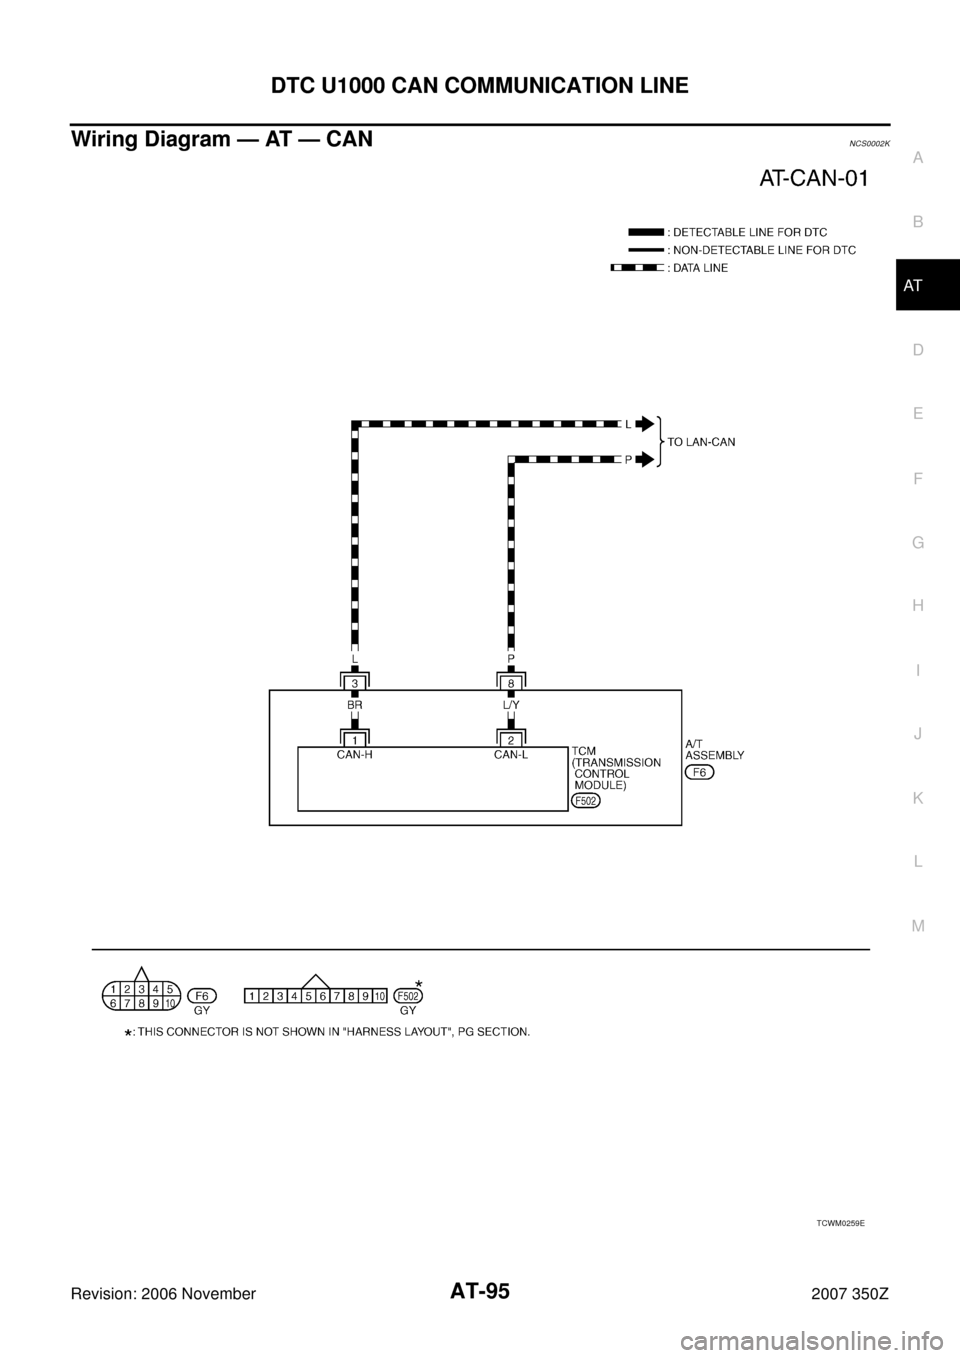 NISSAN 350Z 2007 Z33 Automatic Transmission Workshop Manual DTC U1000 CAN COMMUNICATION LINE
AT-95
D
E
F
G
H
I
J
K
L
MA
B
AT
Revision: 2006 November2007 350Z
Wiring Diagram — AT — CANNCS0002K
TCWM0259E 